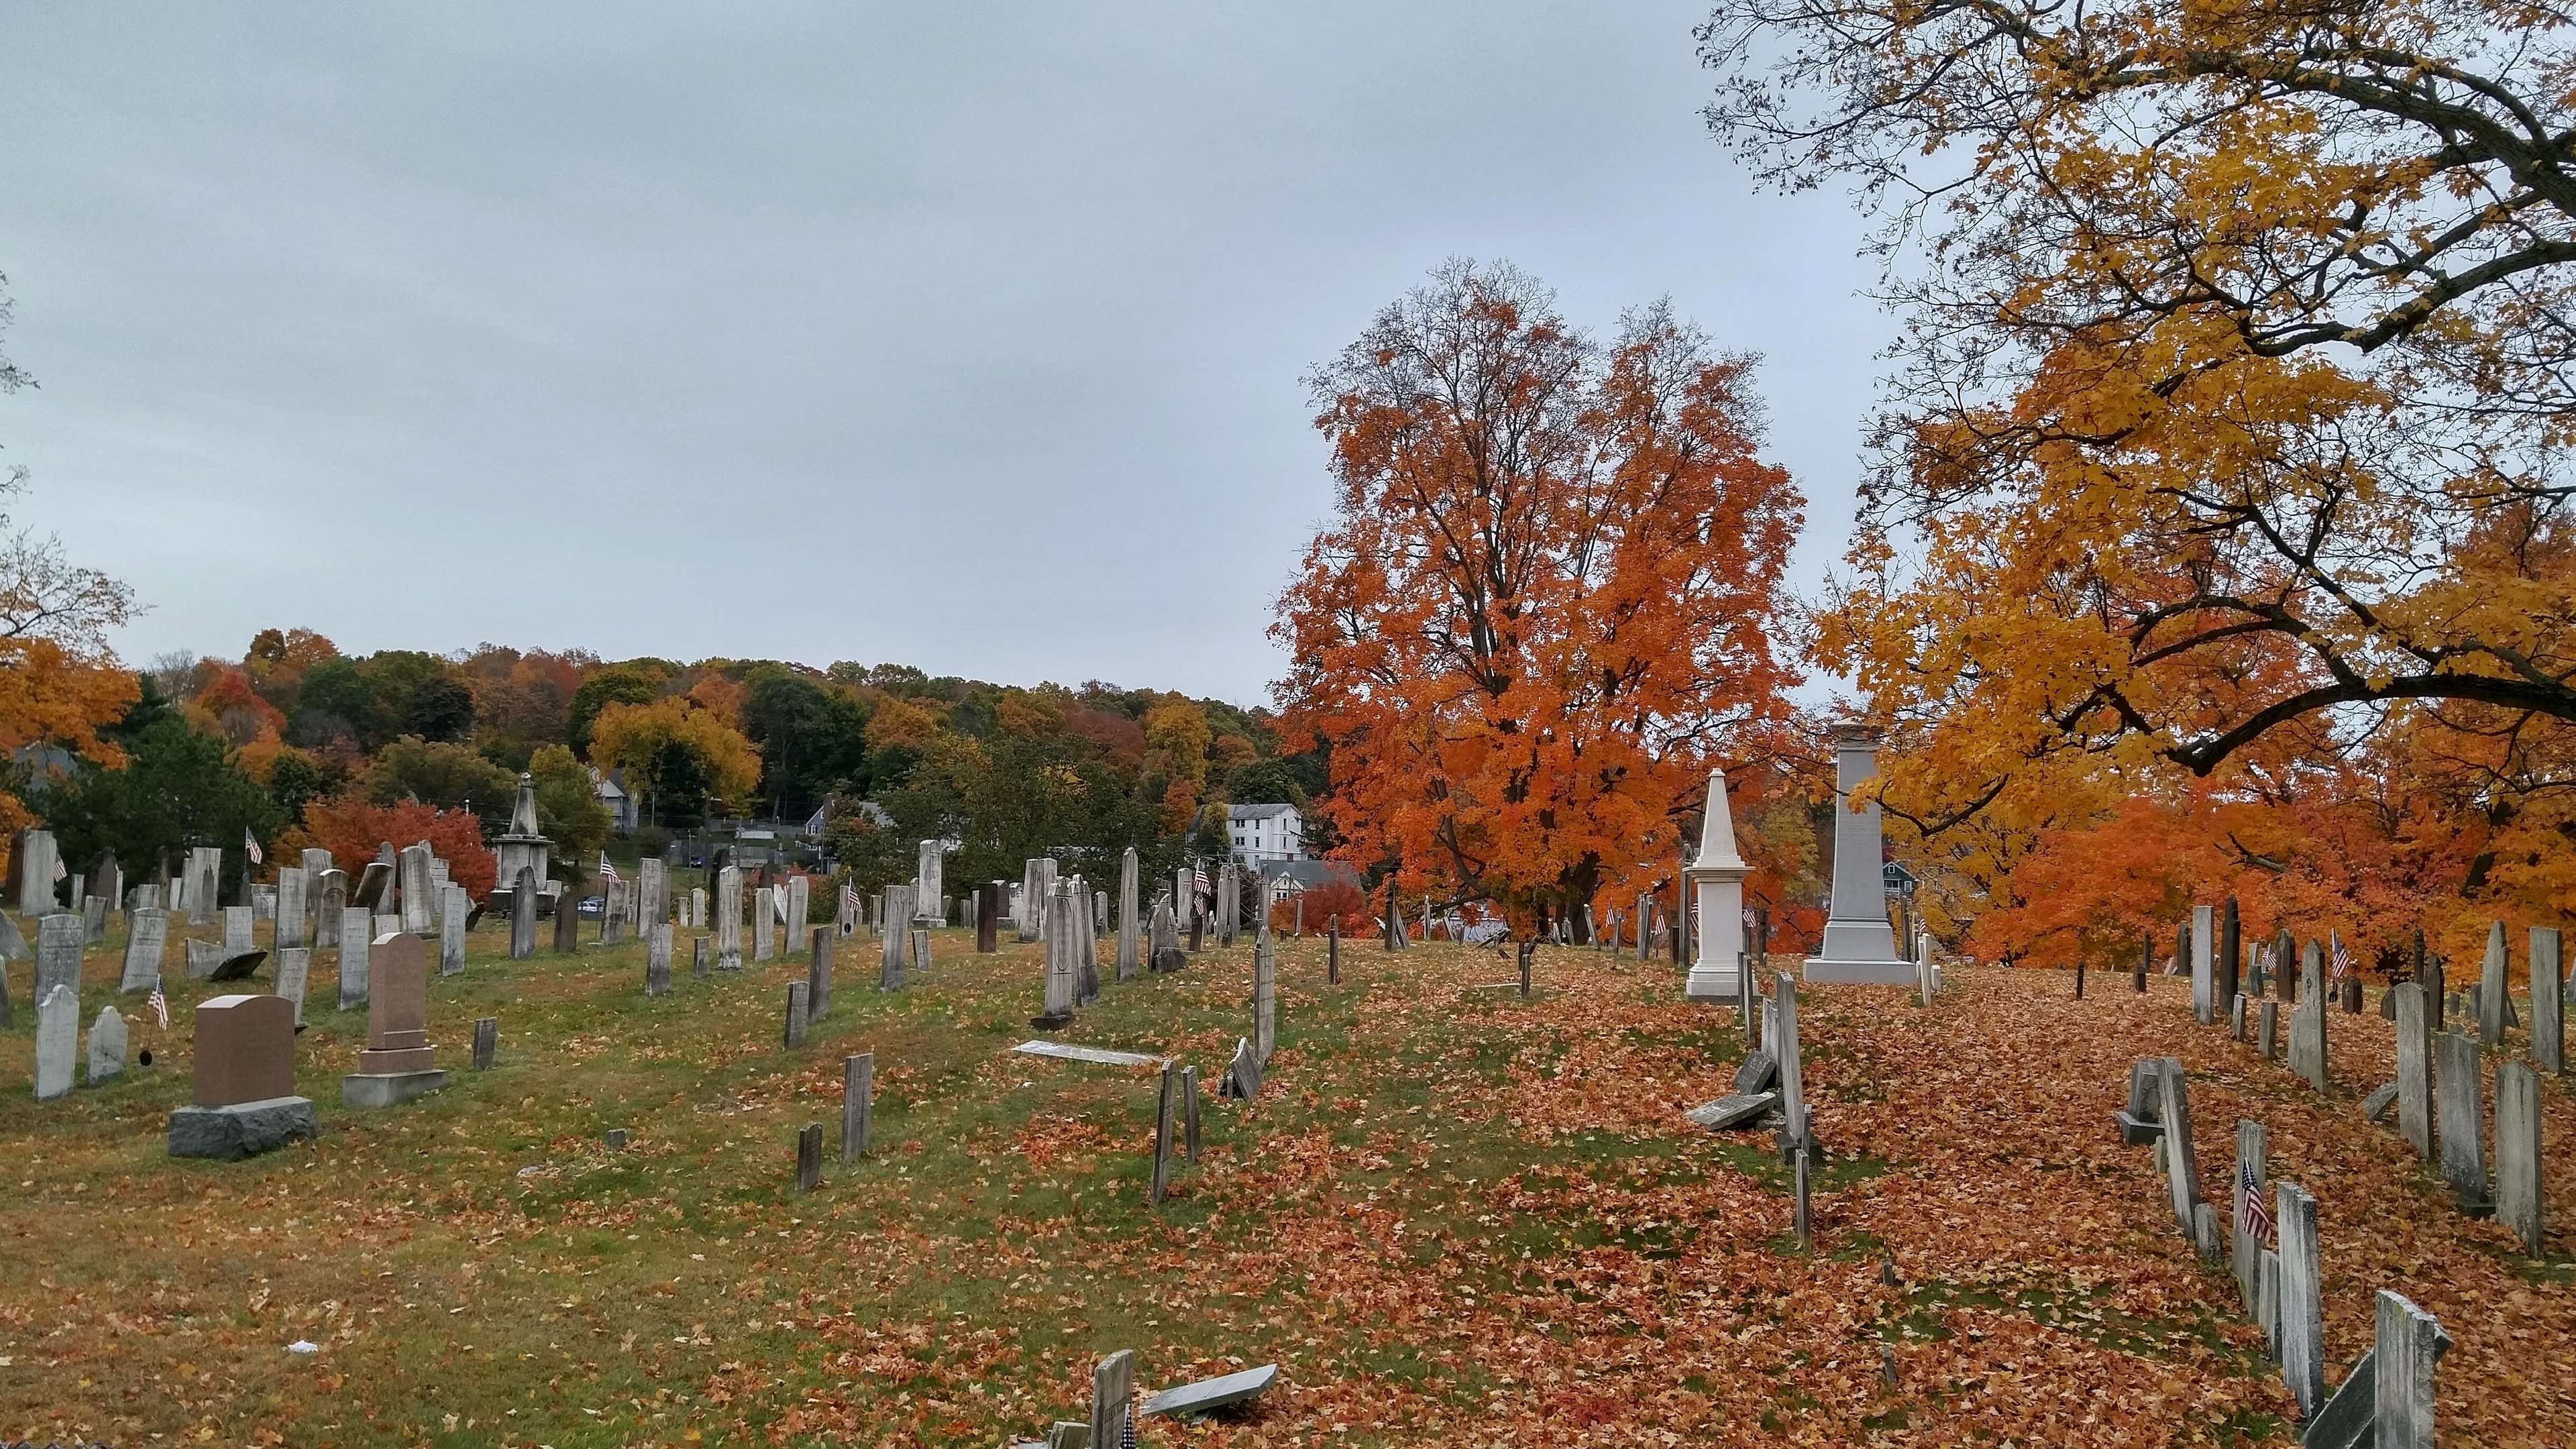 3840x2160 cloudy, fall, foliage, graveyard, leaves, orange 4k wallpaper JPG 1284 kB